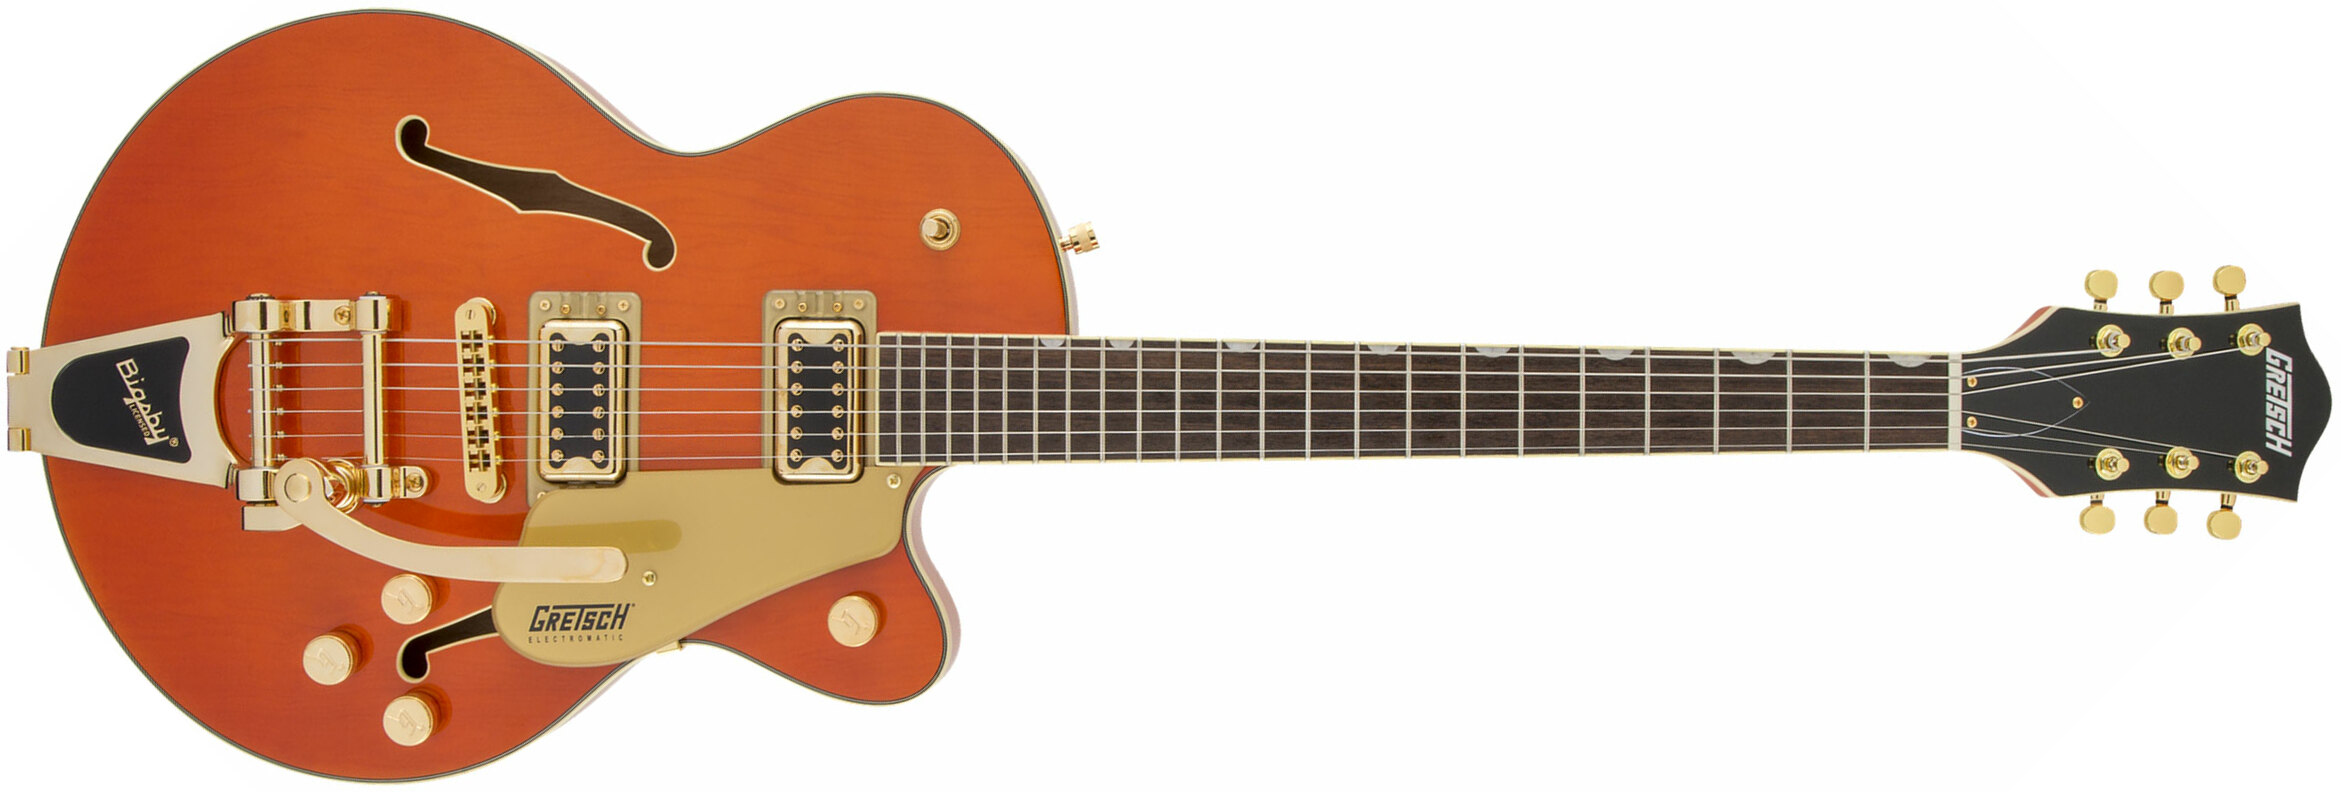 Gretsch G5655tg Electromatic Center Block Jr. Hh Bigsby Lau - Orange Stain - Semi hollow elektriche gitaar - Main picture